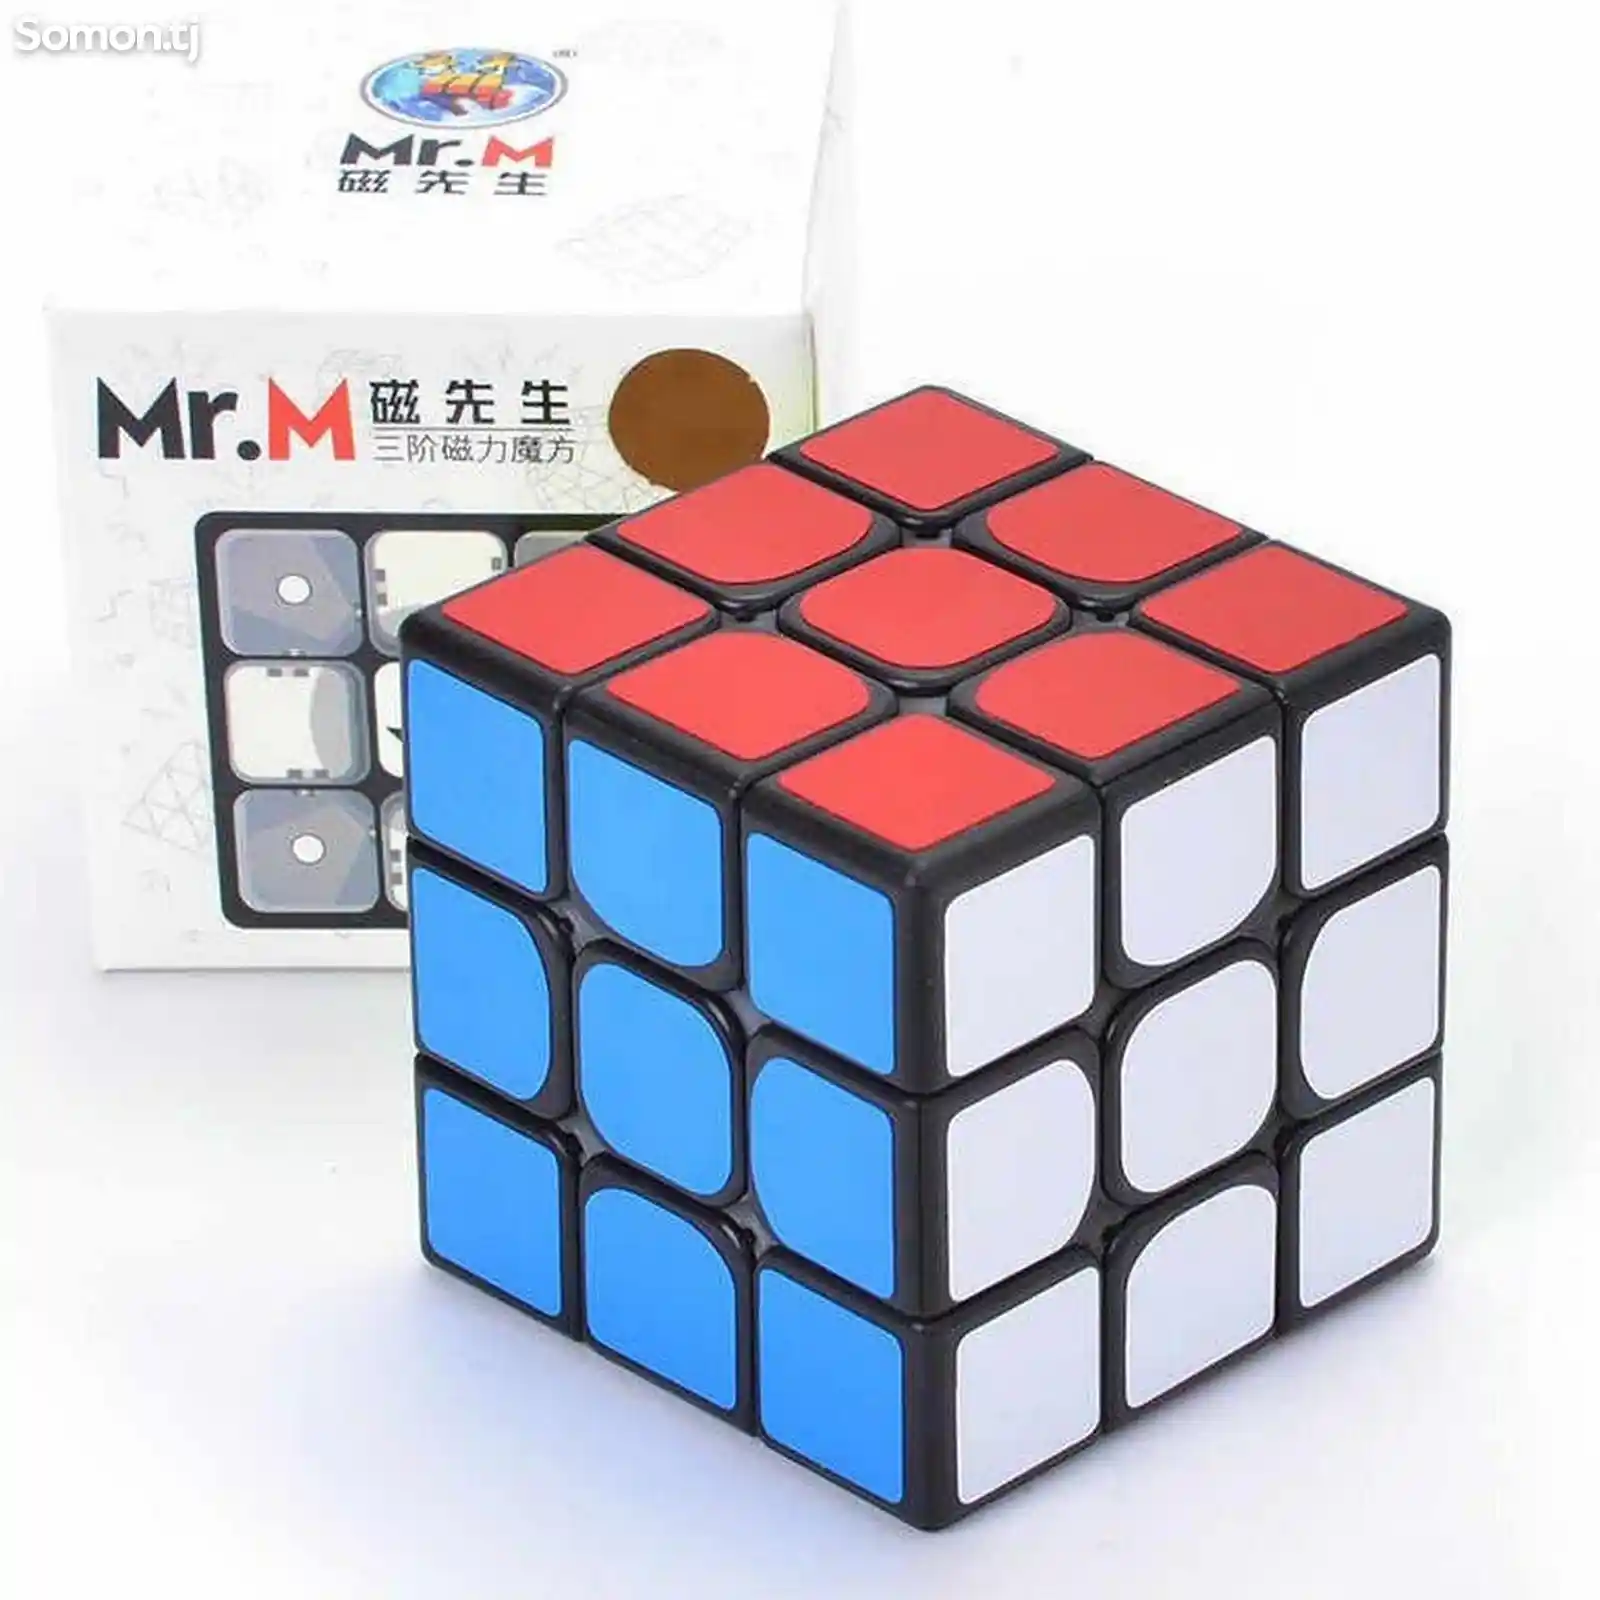 3х3х3 кубик Рубика магнитный в наклейке, Mr.M Sengso-5